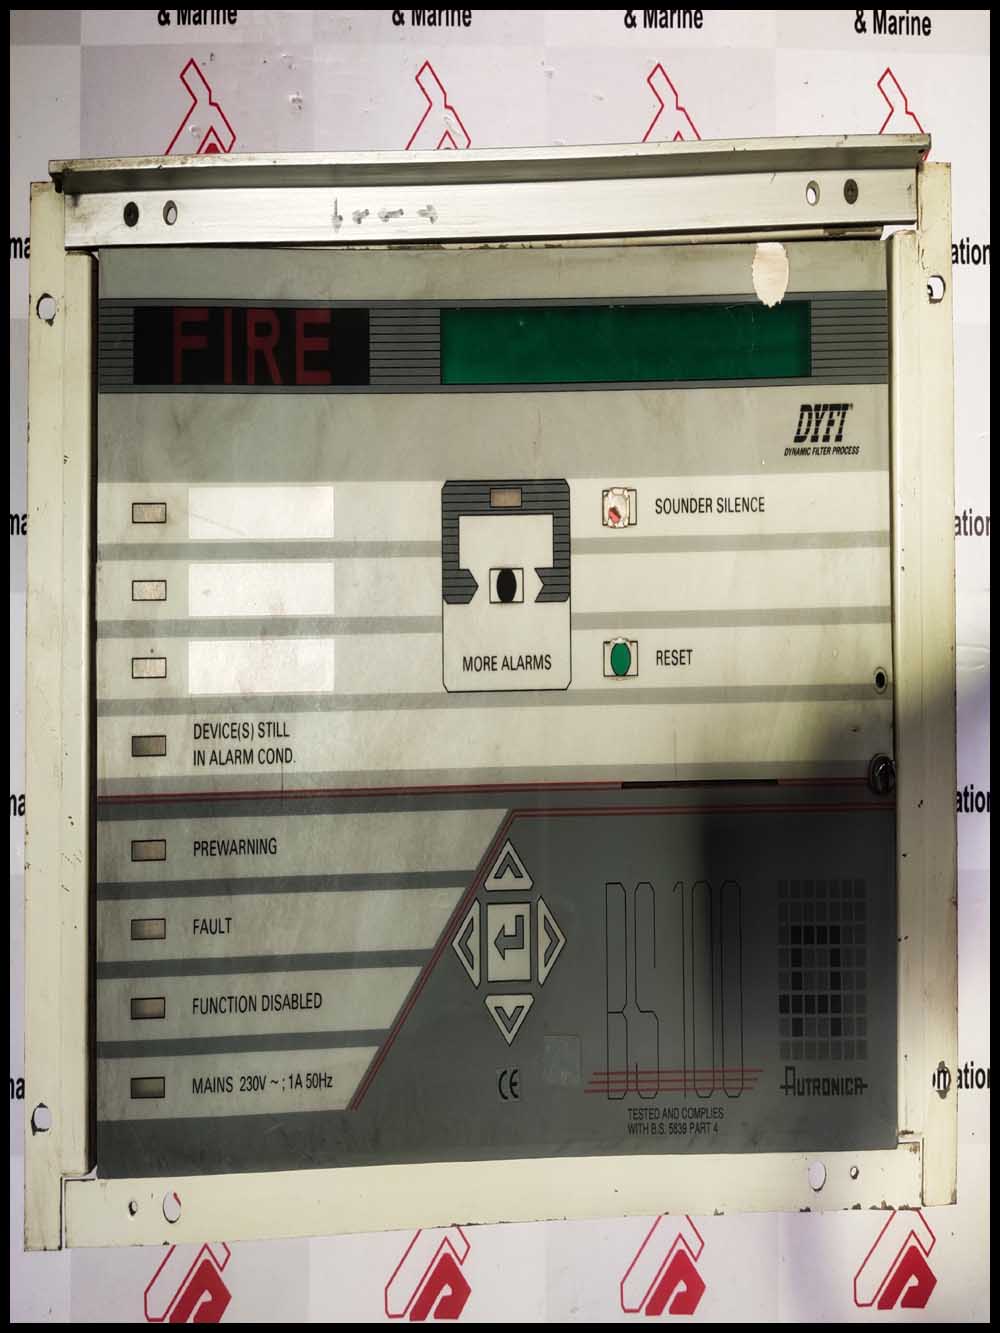 AUTRONICA FIRE ALARM PANEL BS-100